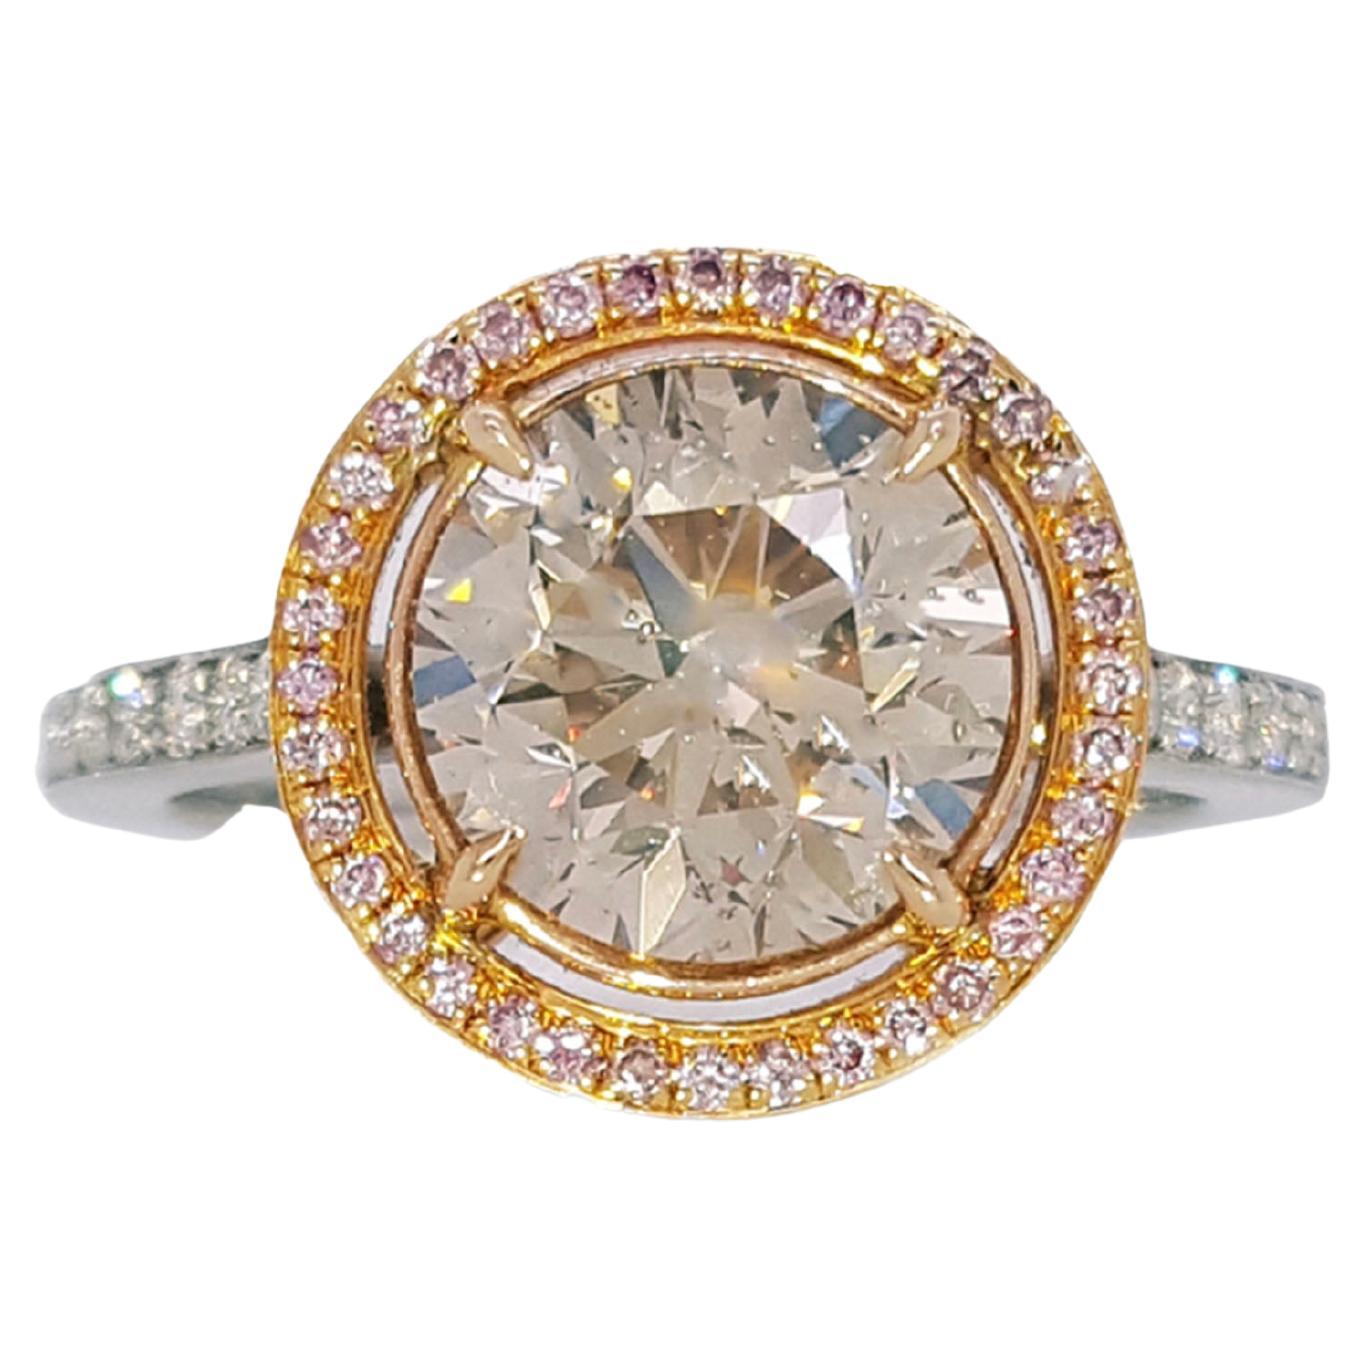 3.70 Carat Round Cut Brown, Pink And White Diamond, Engagement Ring in Platinum.